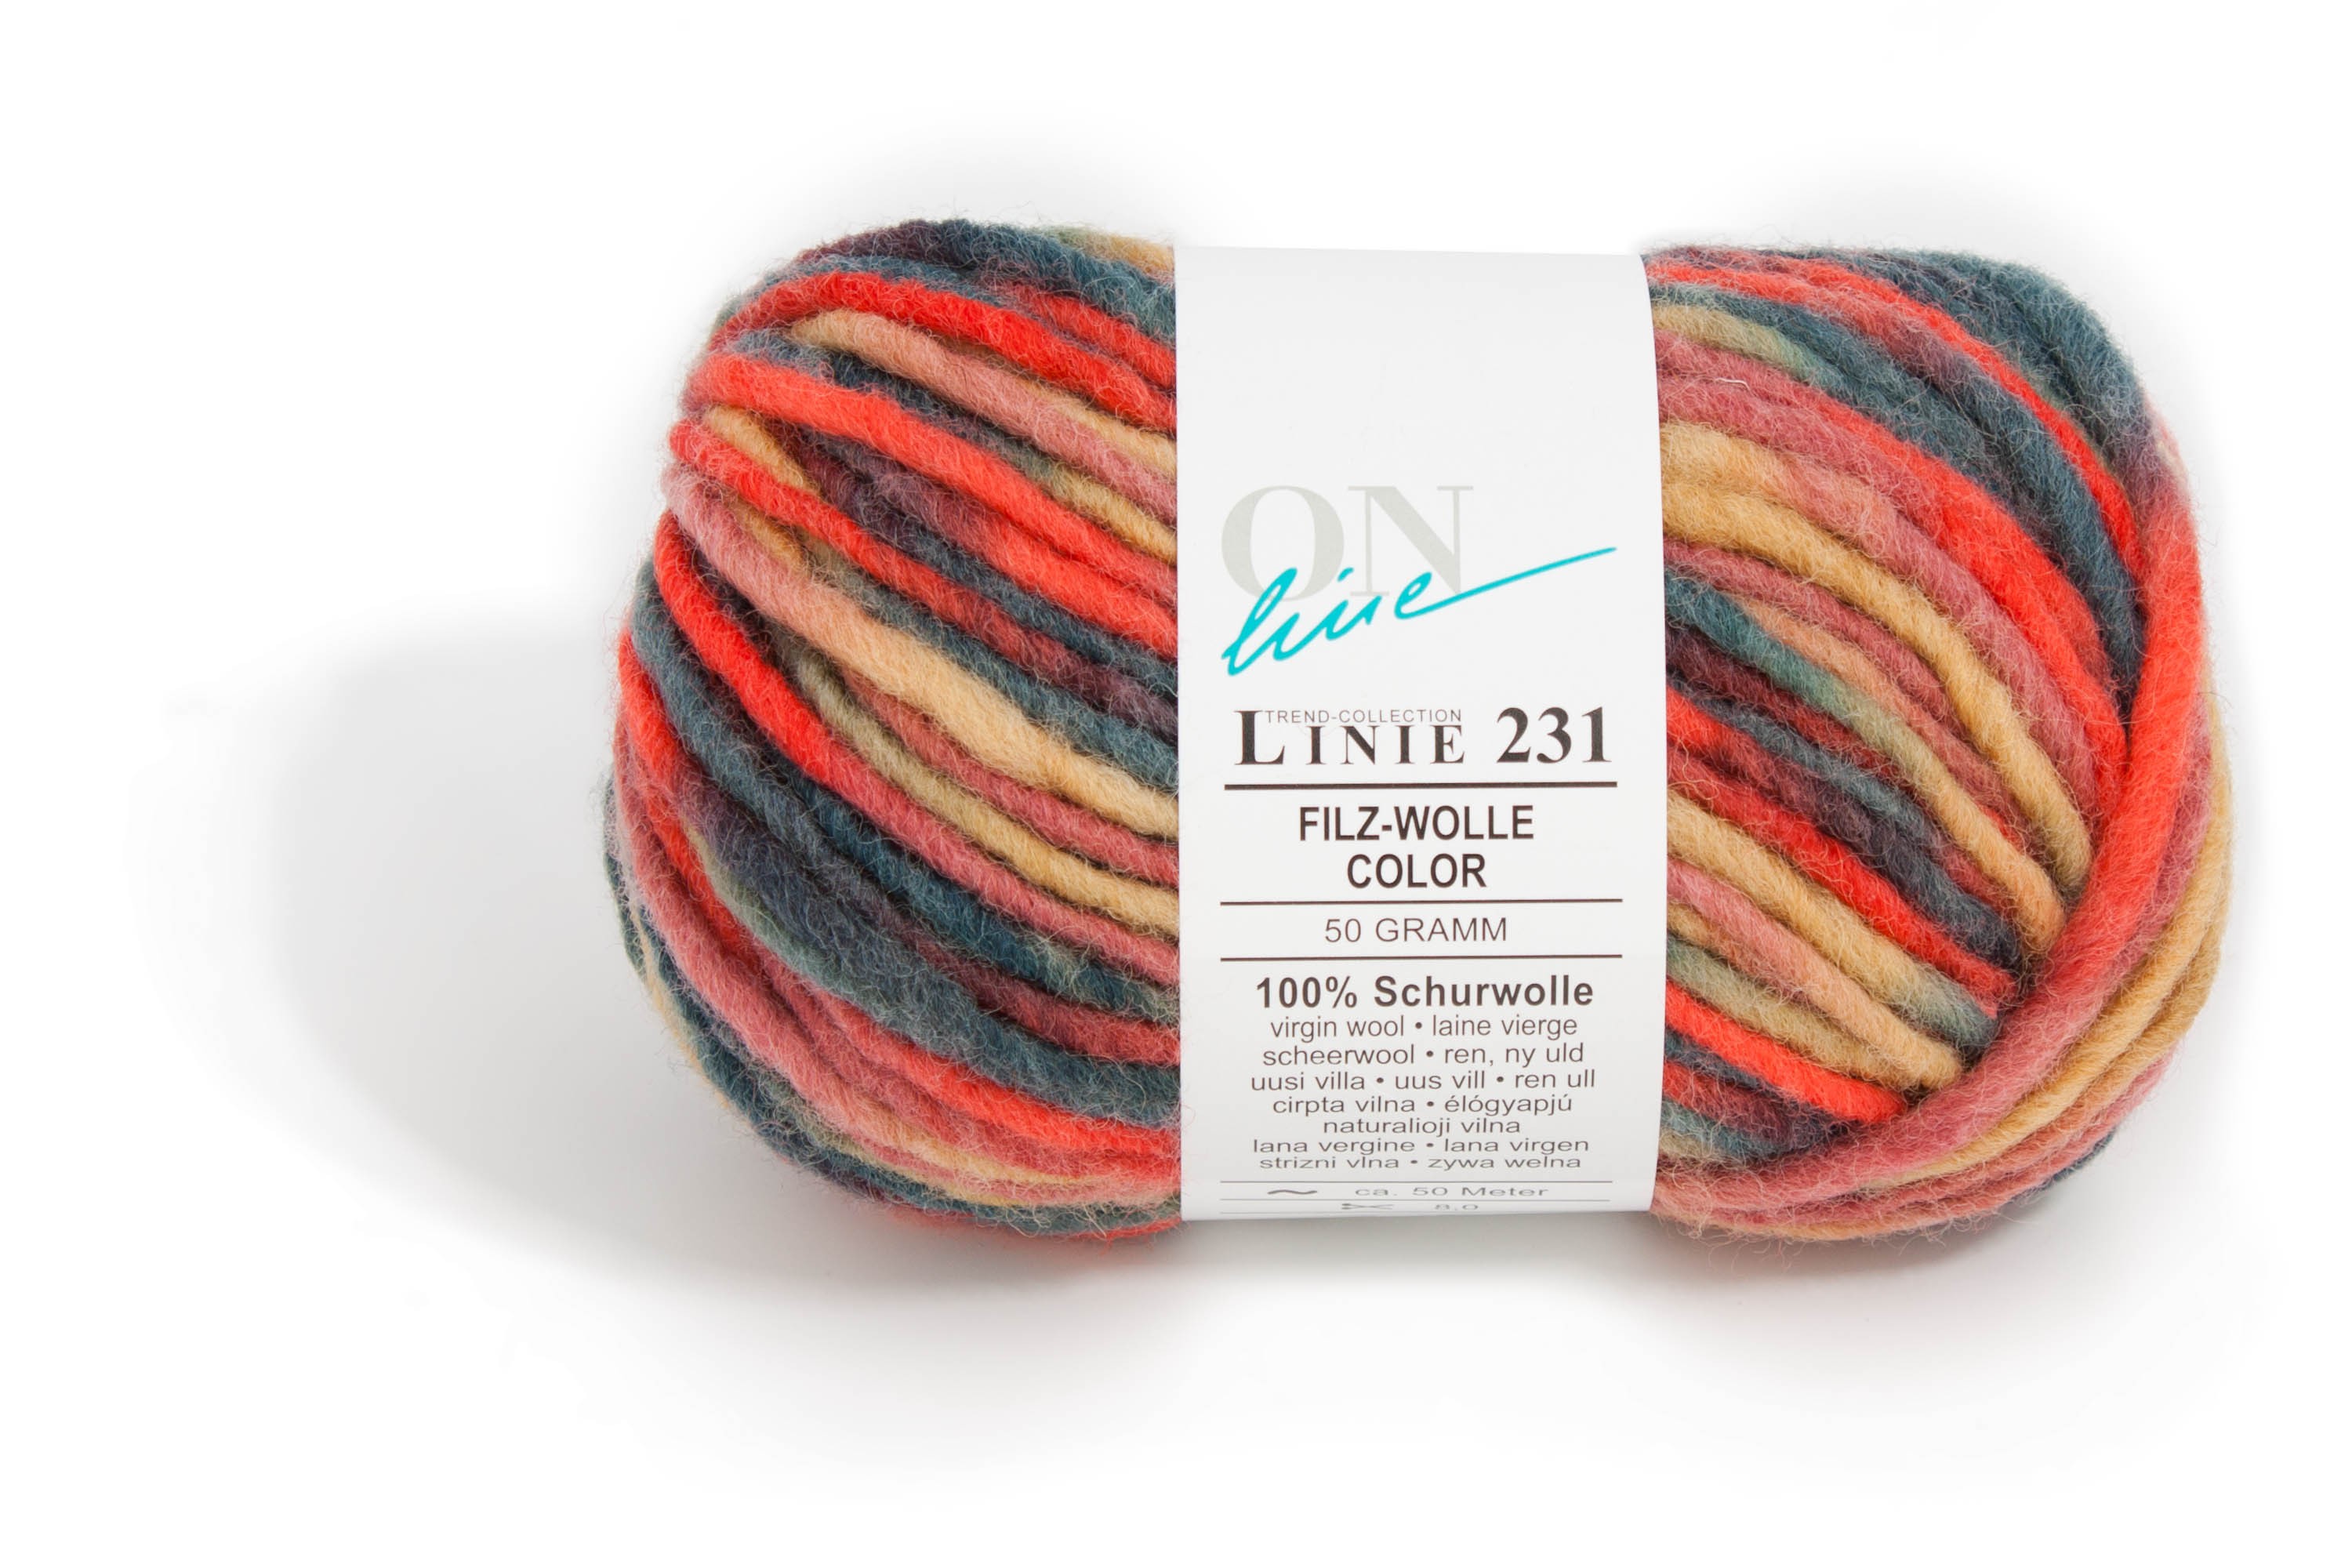 ONline Linie 231 Filz-Wolle color